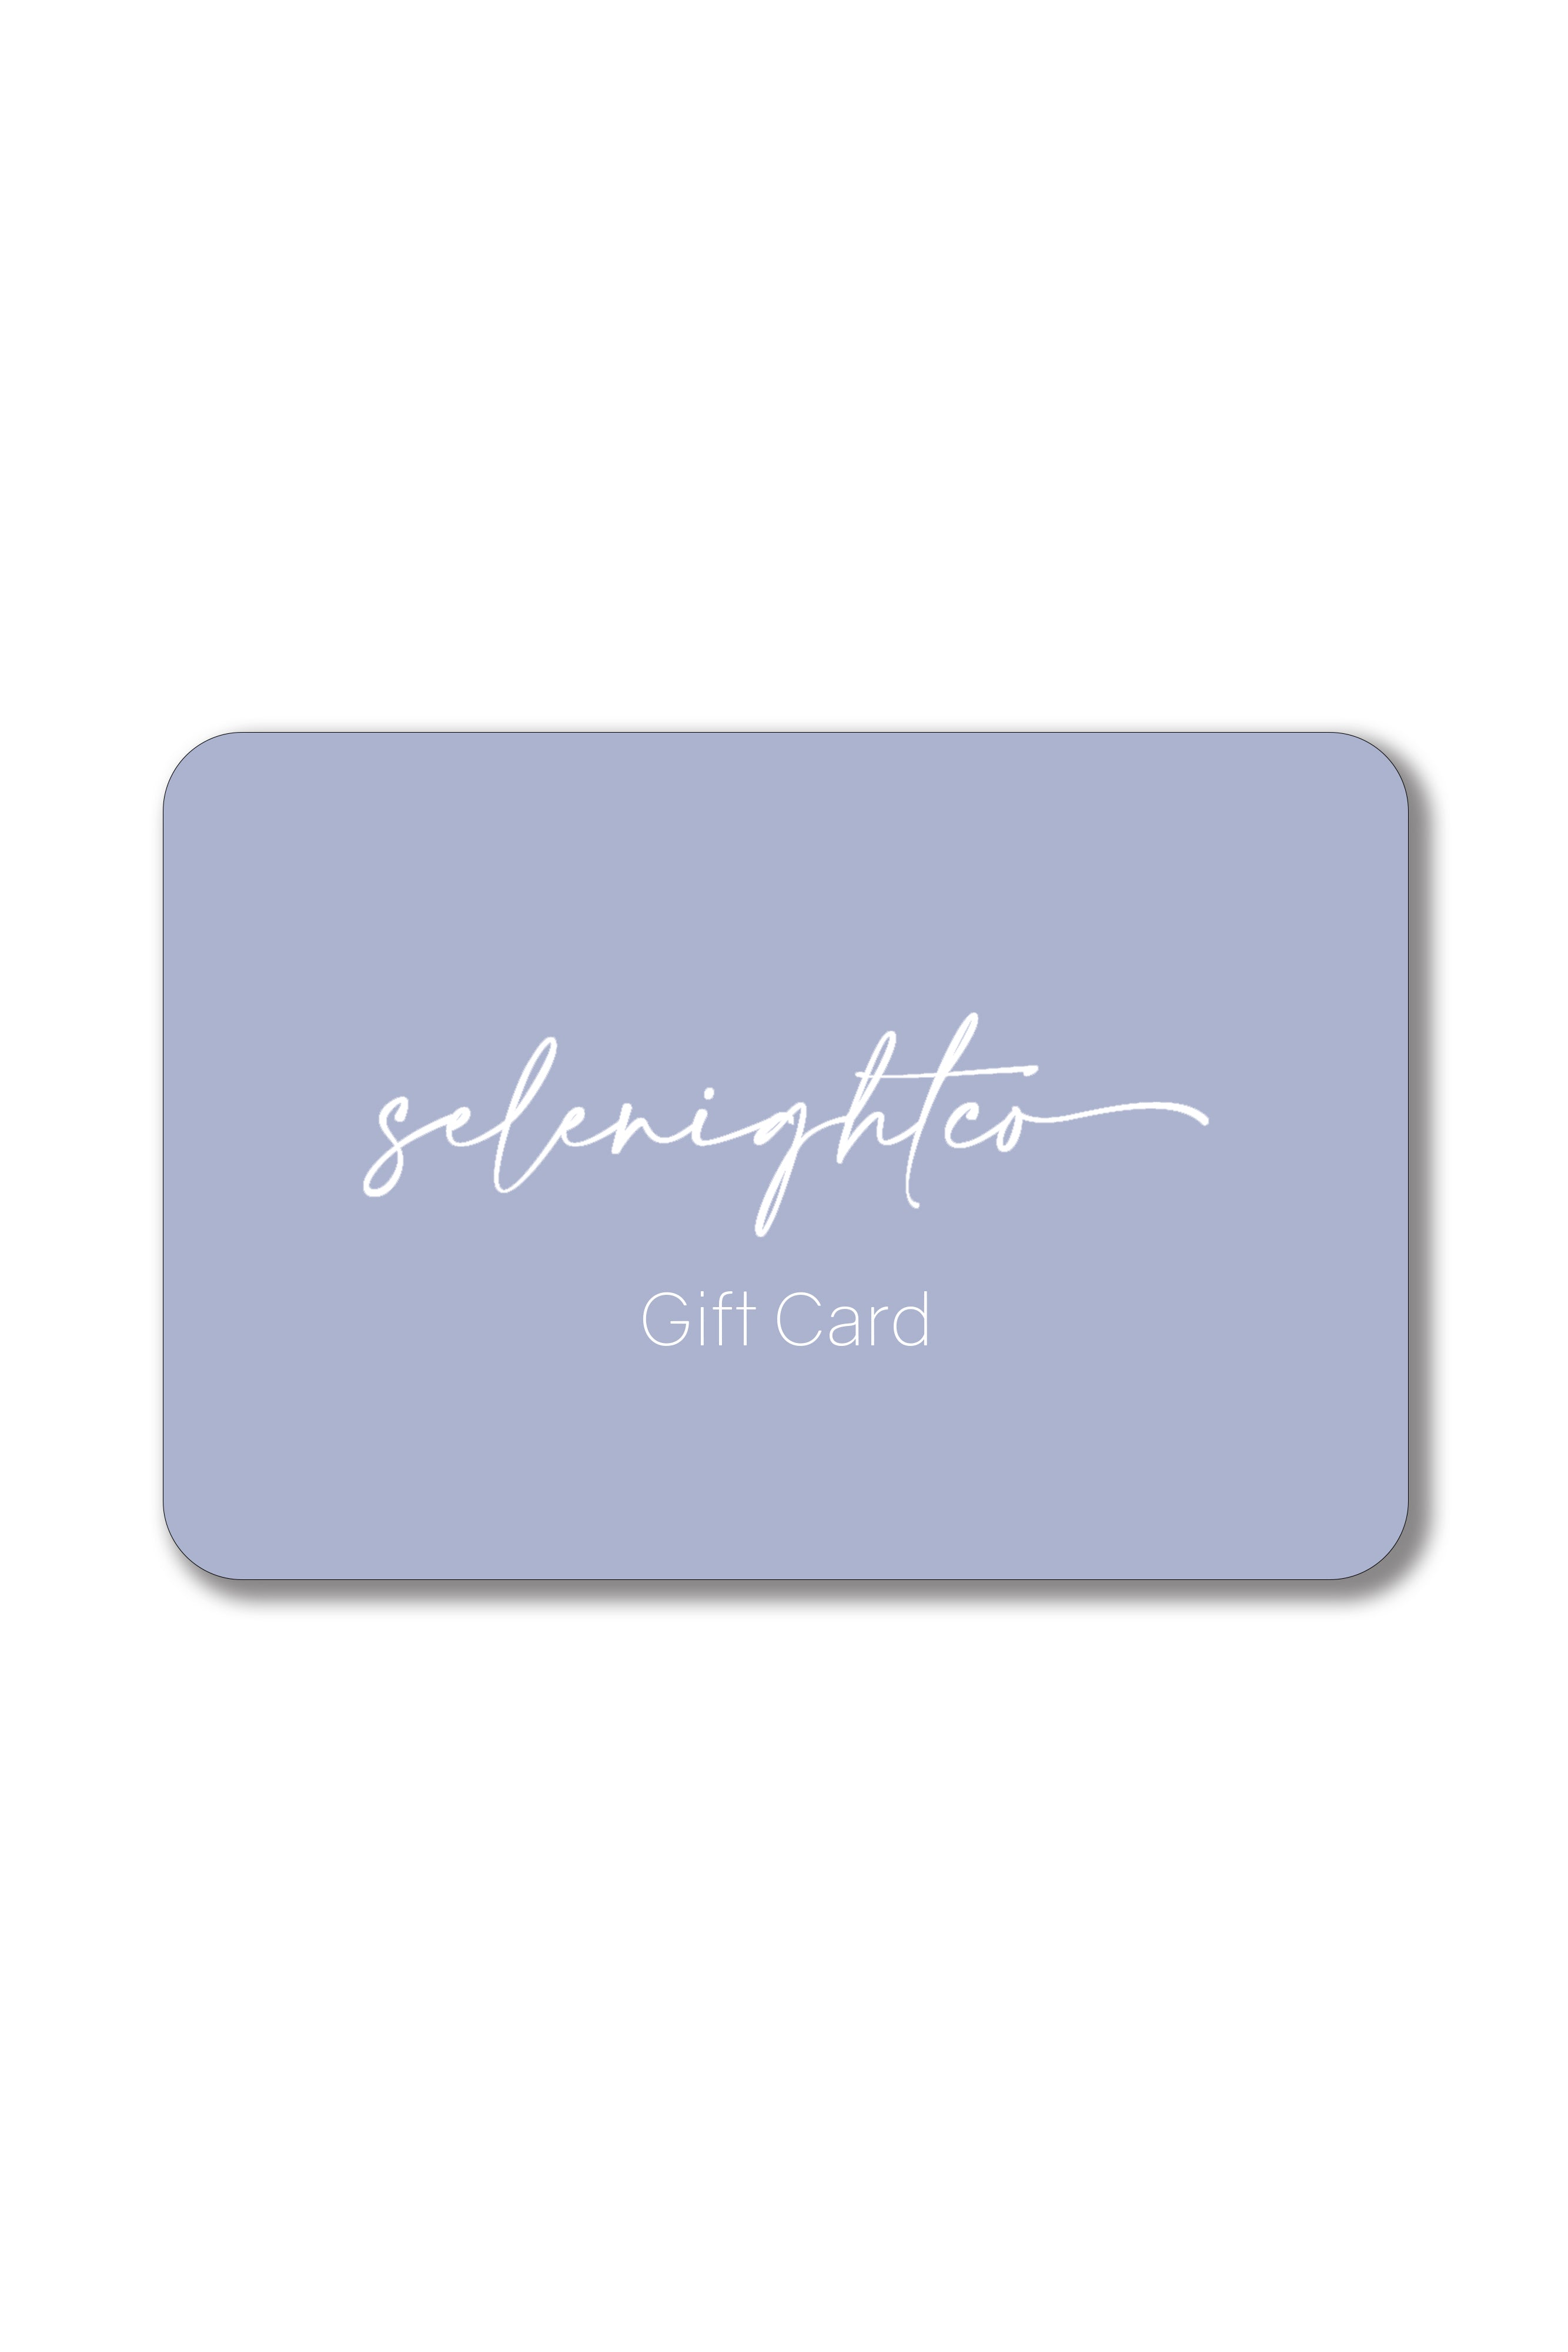 Selenightco Digital Gift Card